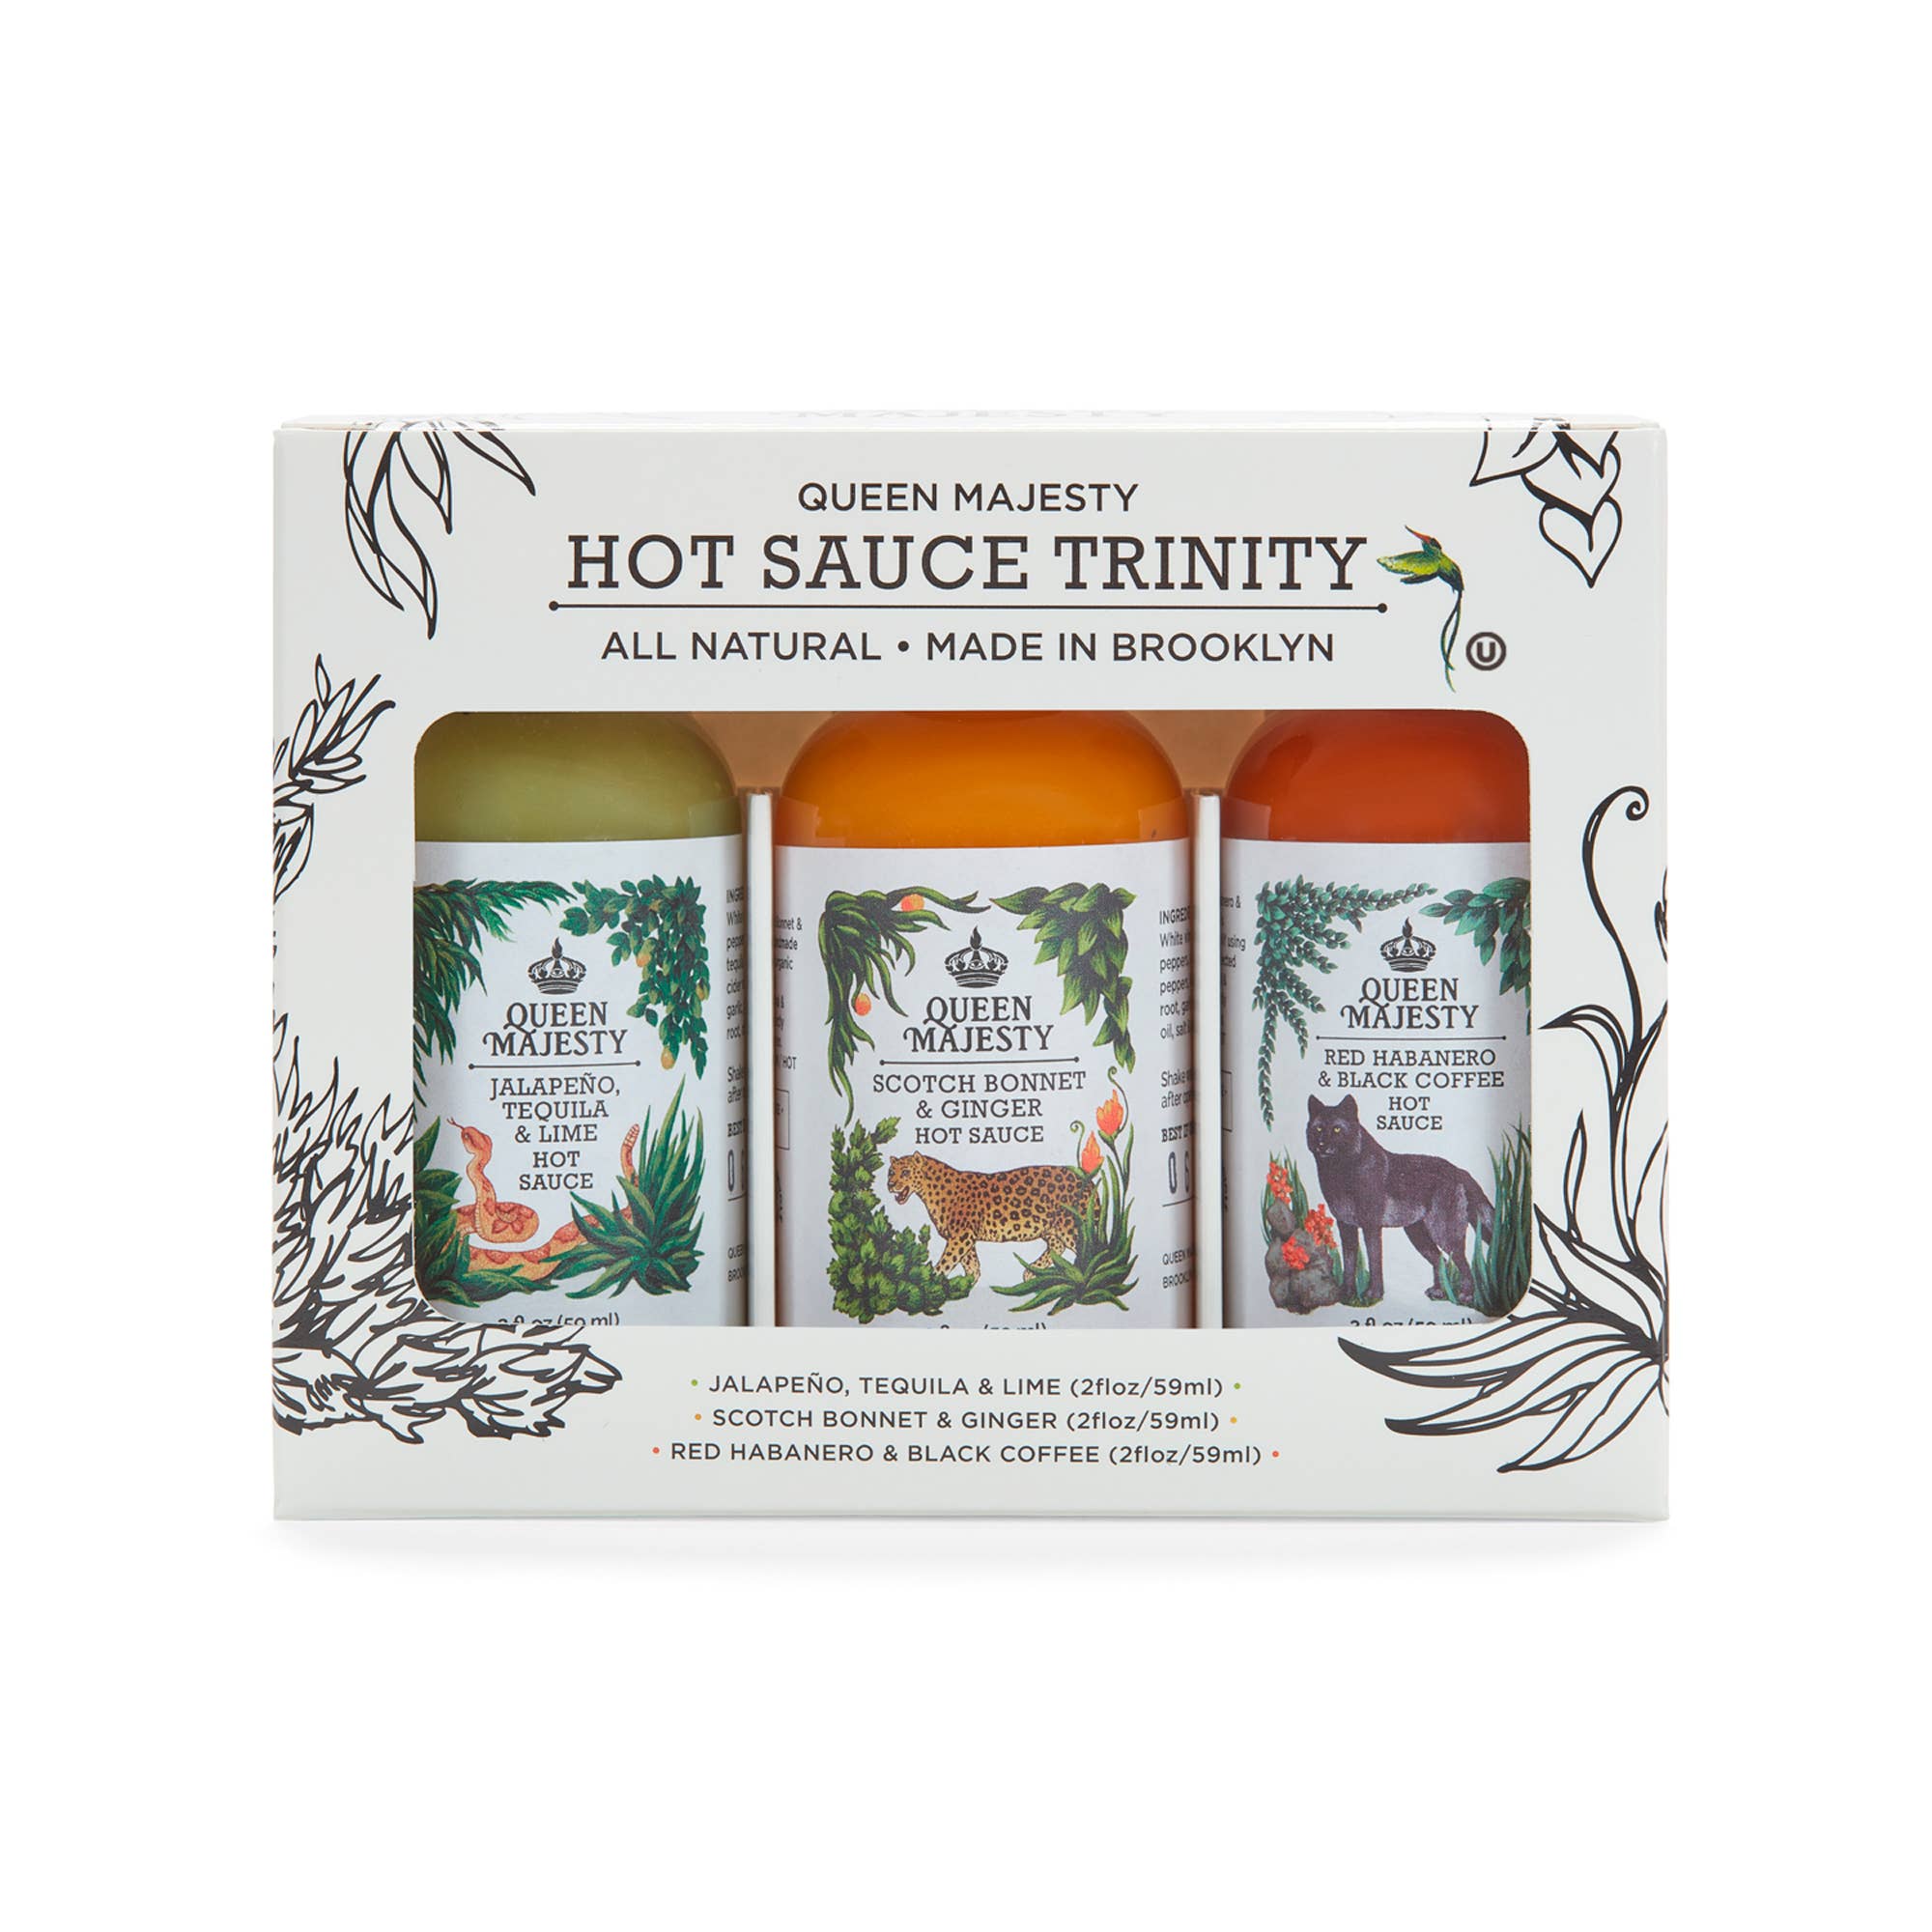 Queen Majesty Hot Sauce - 2 oz. Trinity Sampler